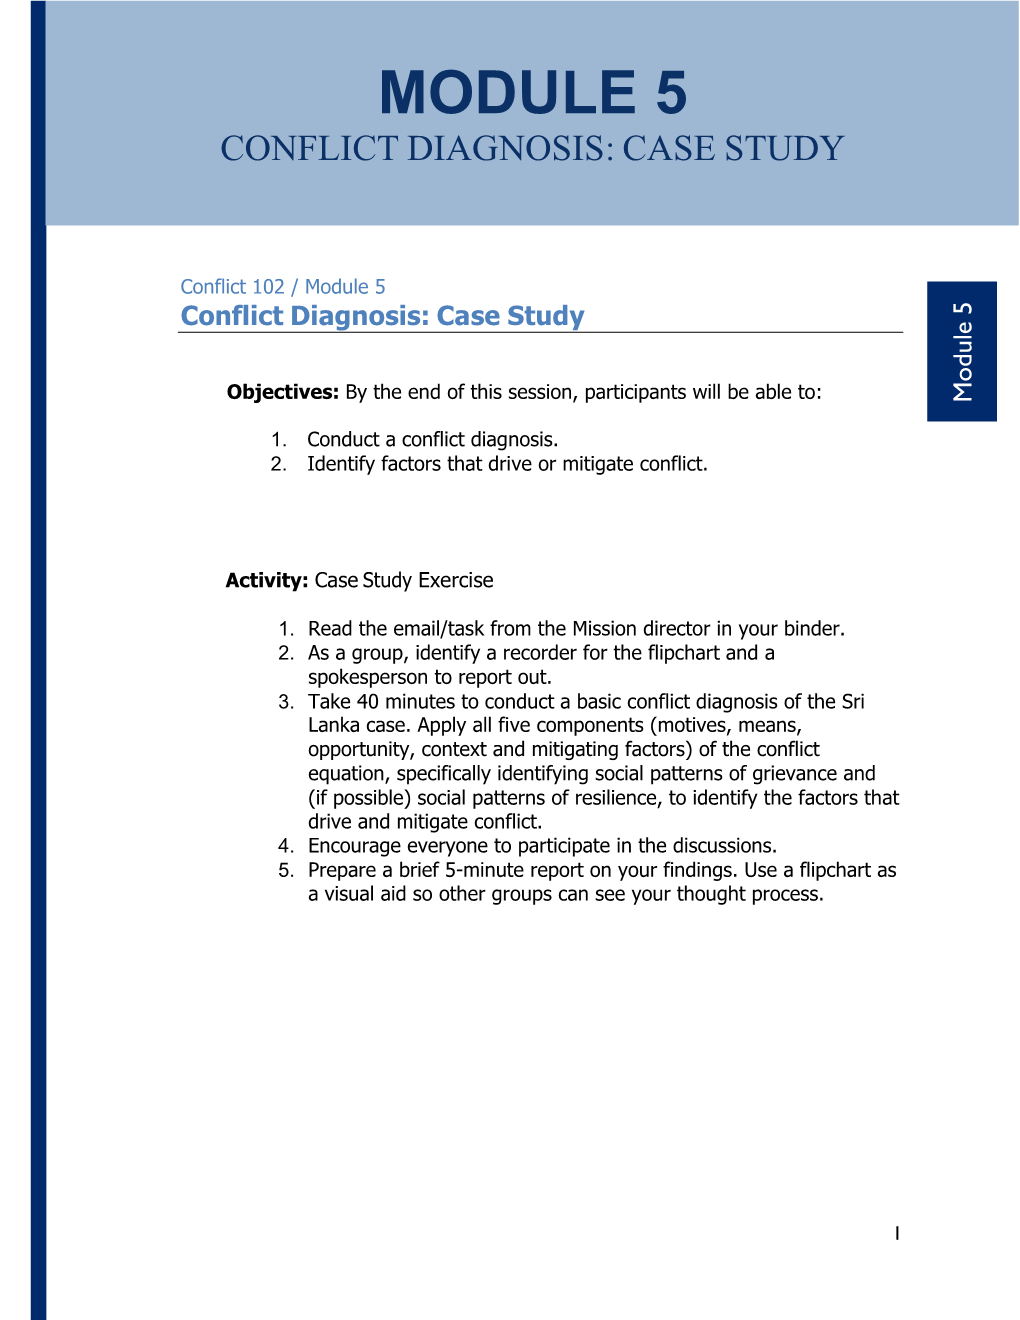 Module 5 Conflict 102 / Module 5 the Sri Lanka Case: Undertaking a Conflict Diagnosis